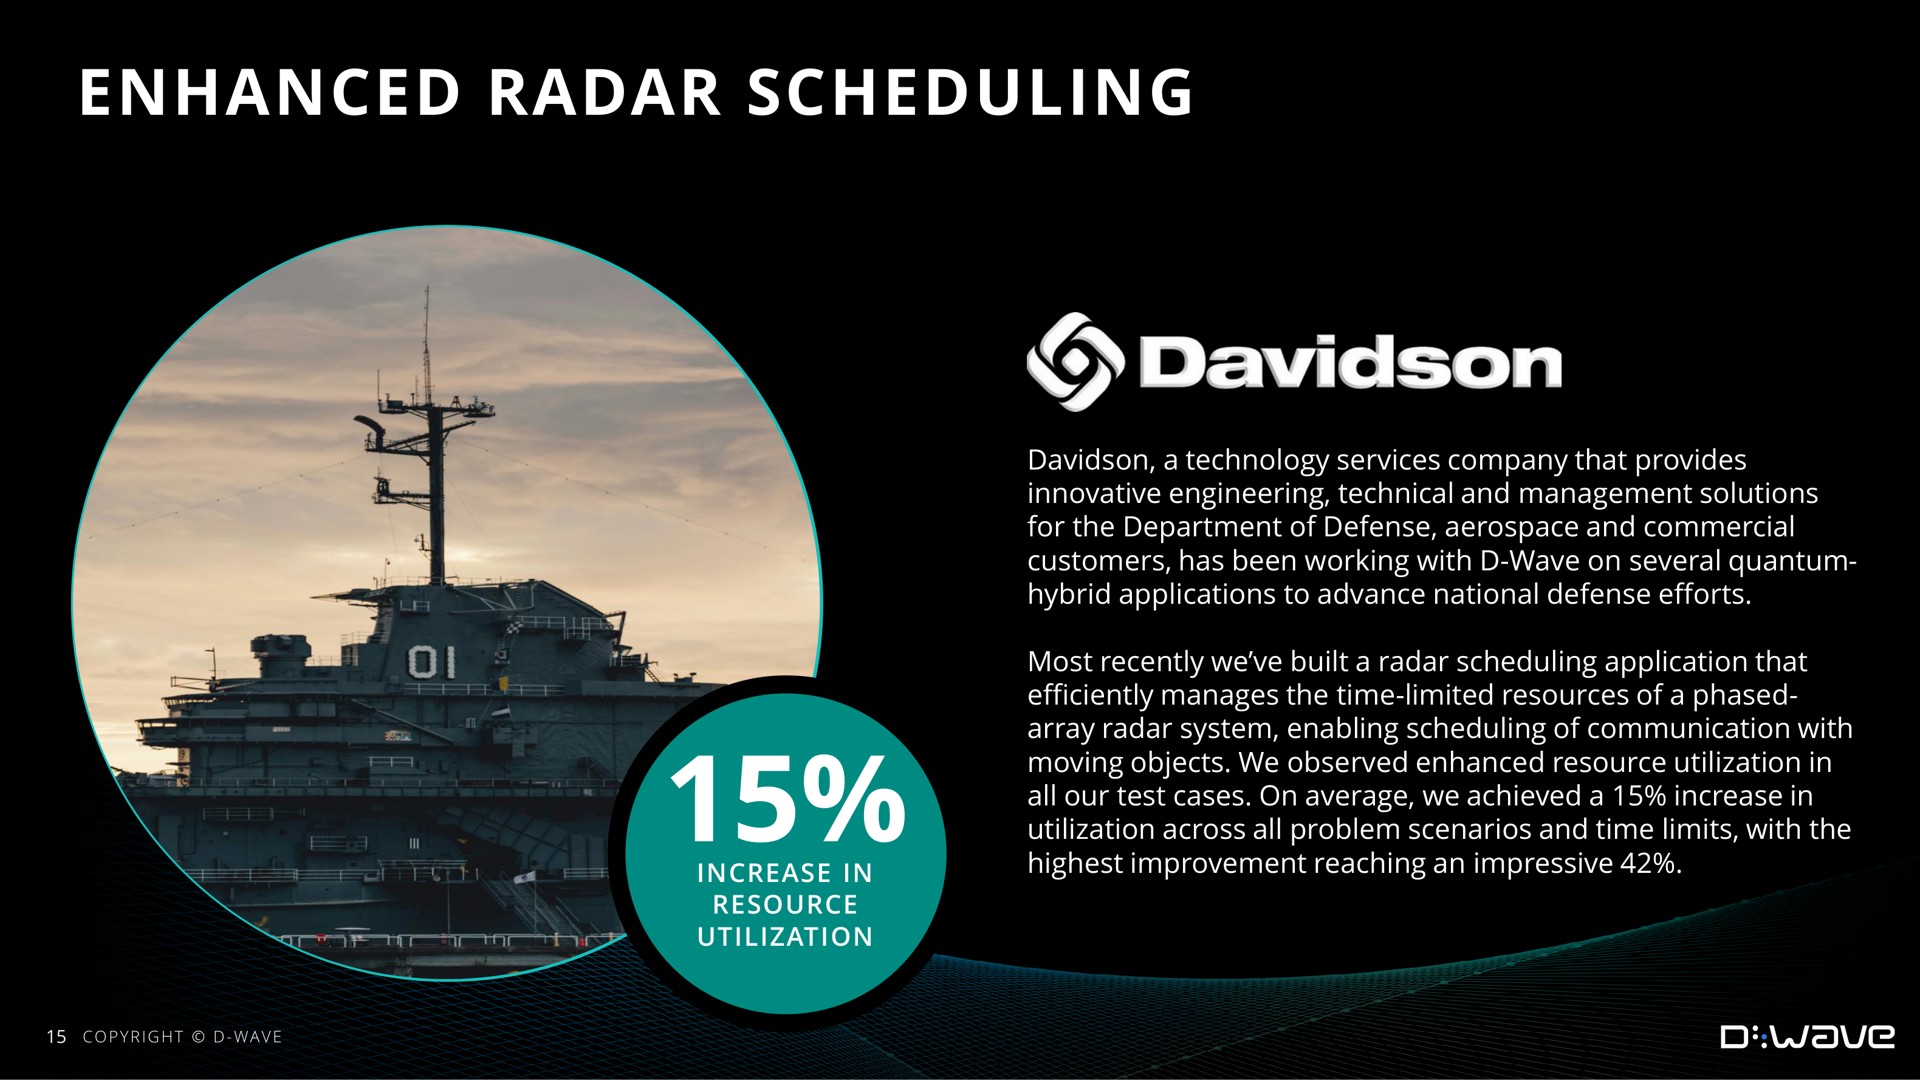 enhanced radar scheduling | D-Wave